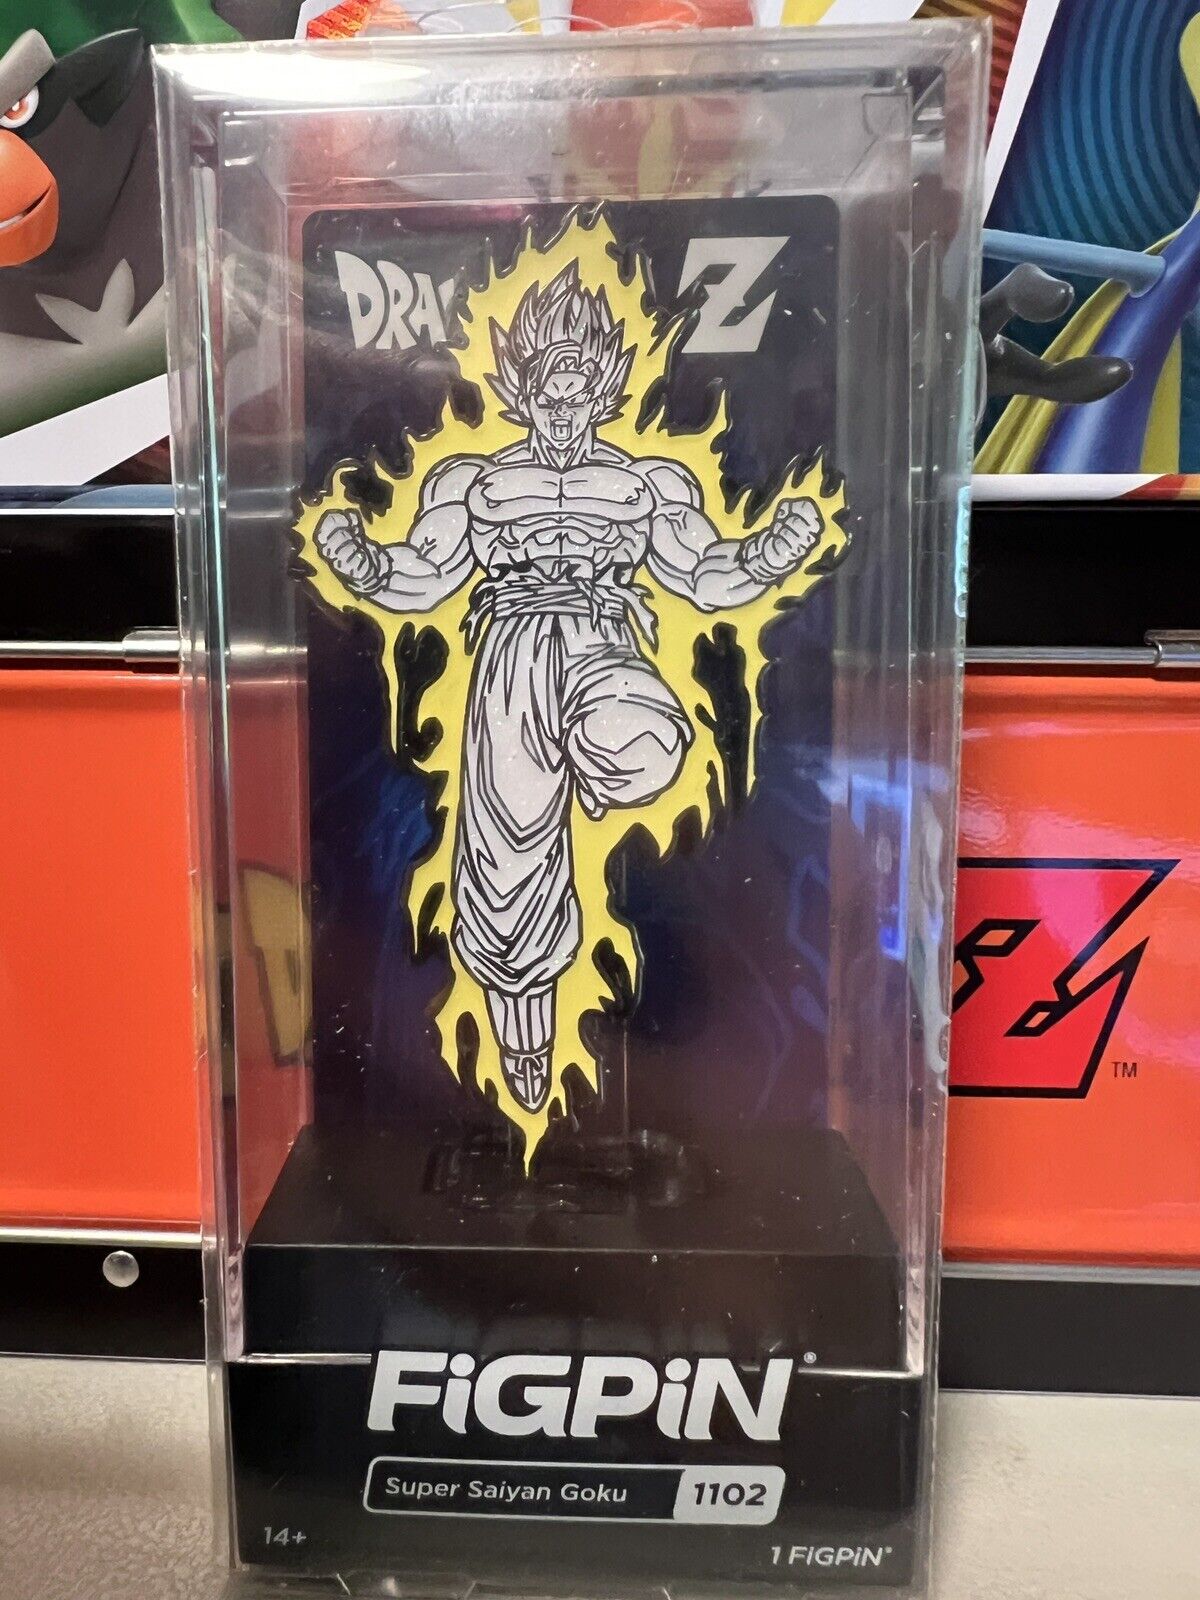 FiGPiN NYCC 2022 Exclusive Super Saiyan Goku Pin (1102) Dragon Ball Z IN HAND